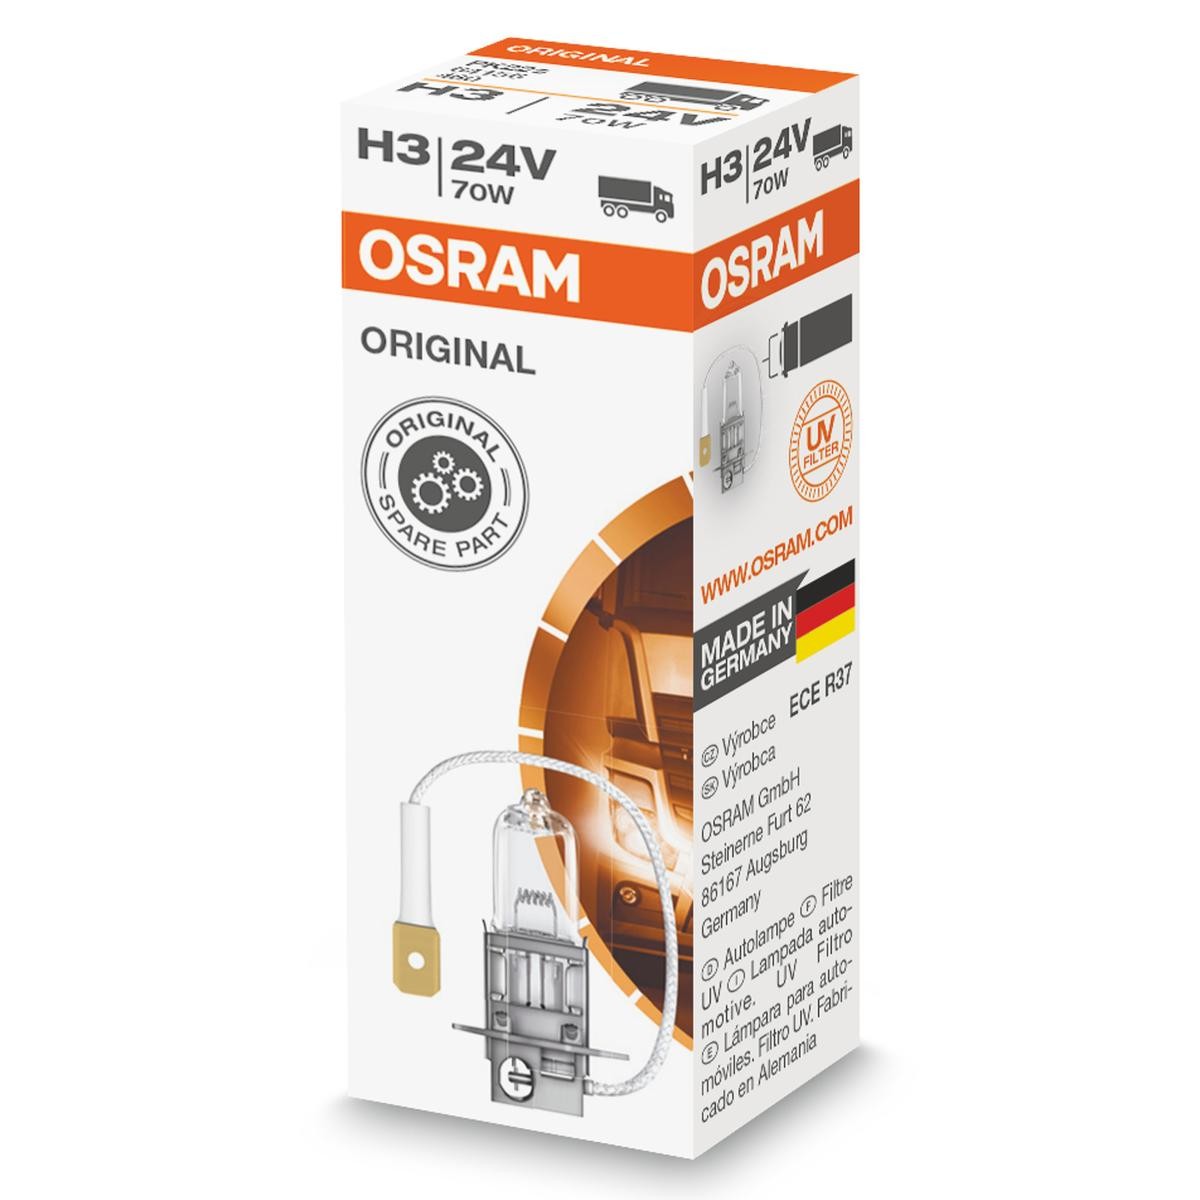 OSRAM ORIGINAL 64156 Lampada anabbagliante H3 24V 70W3200K Alogeno